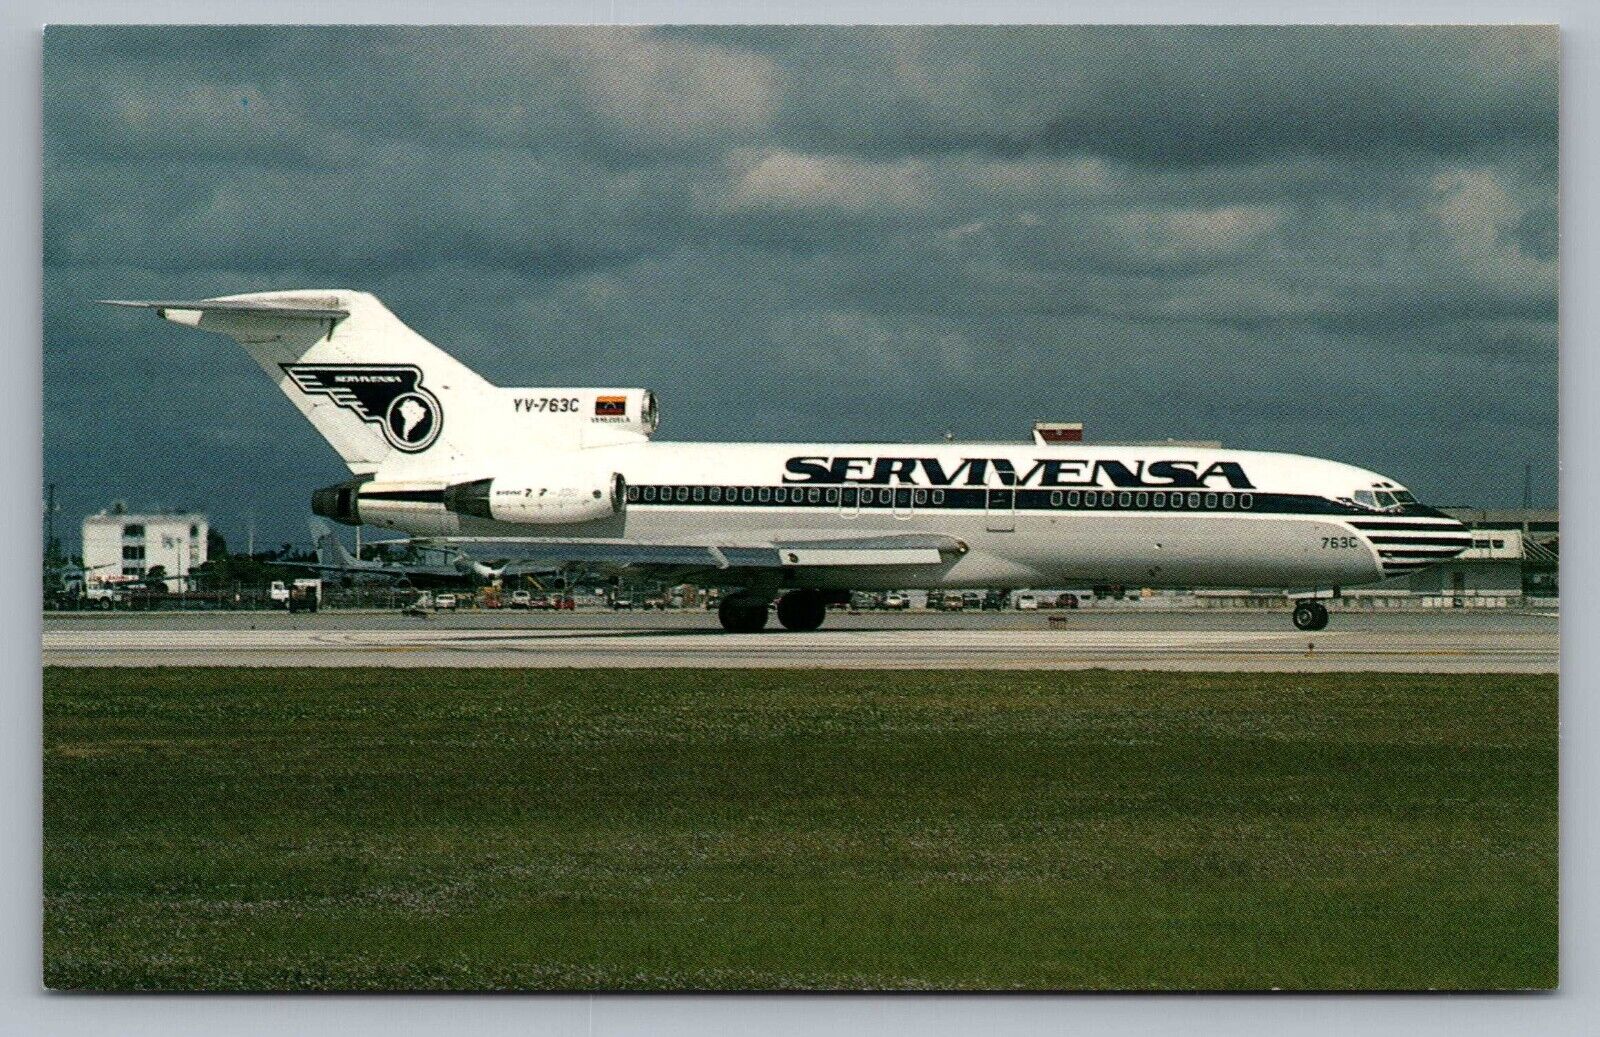 Servivensa Boeing B-727-22 YV-763C Airplane Miami Intl Airport Vtg Postcard P6